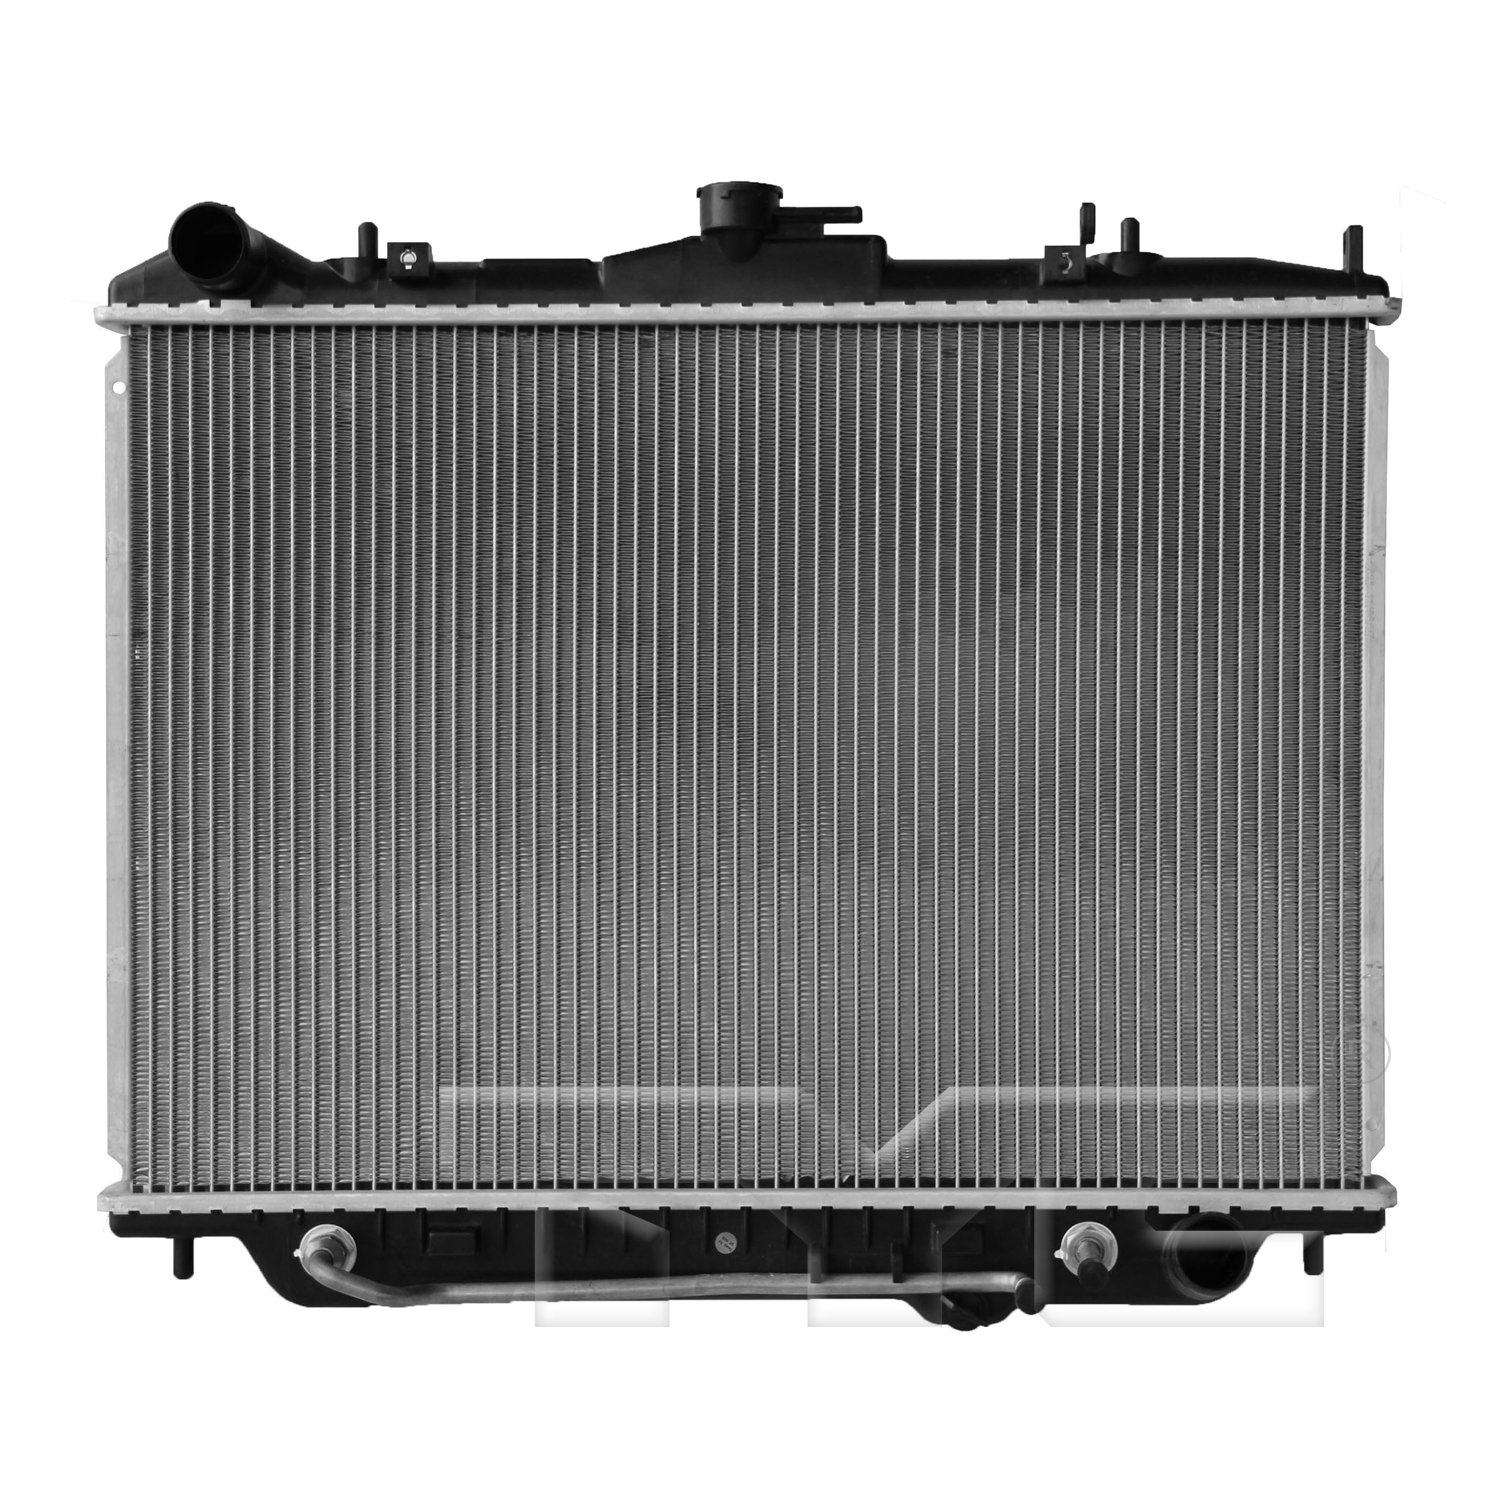 Aftermarket RADIATORS for ISUZU - RODEO, RODEO,98-99,Radiator assembly